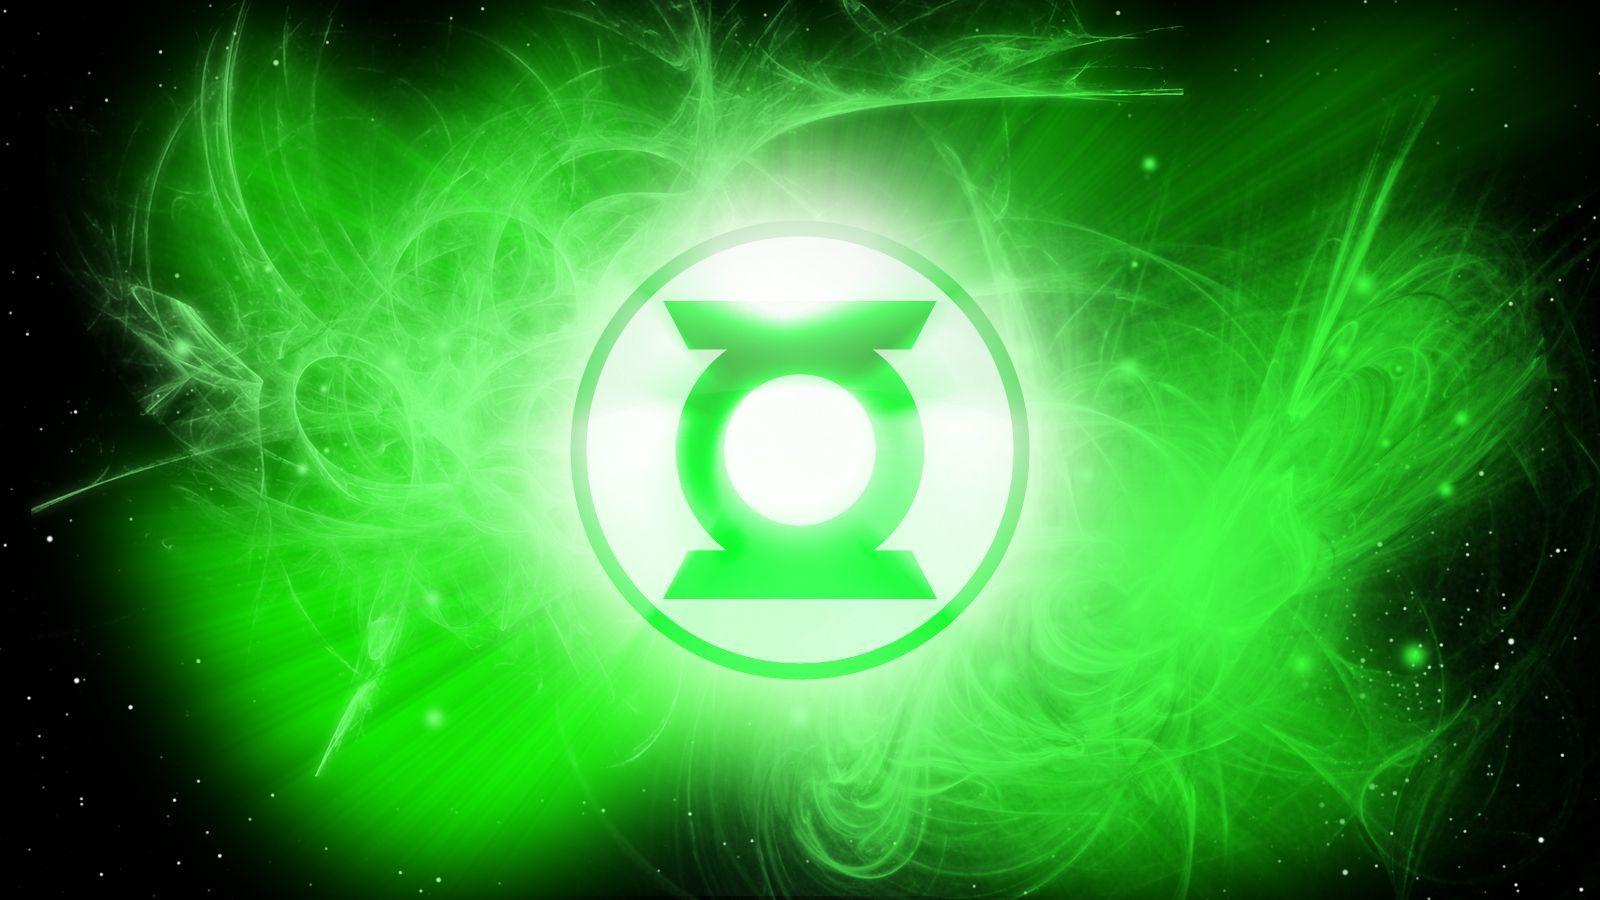 Awesome Lantern Corp wallpaper. Green lantern wallpaper, Green